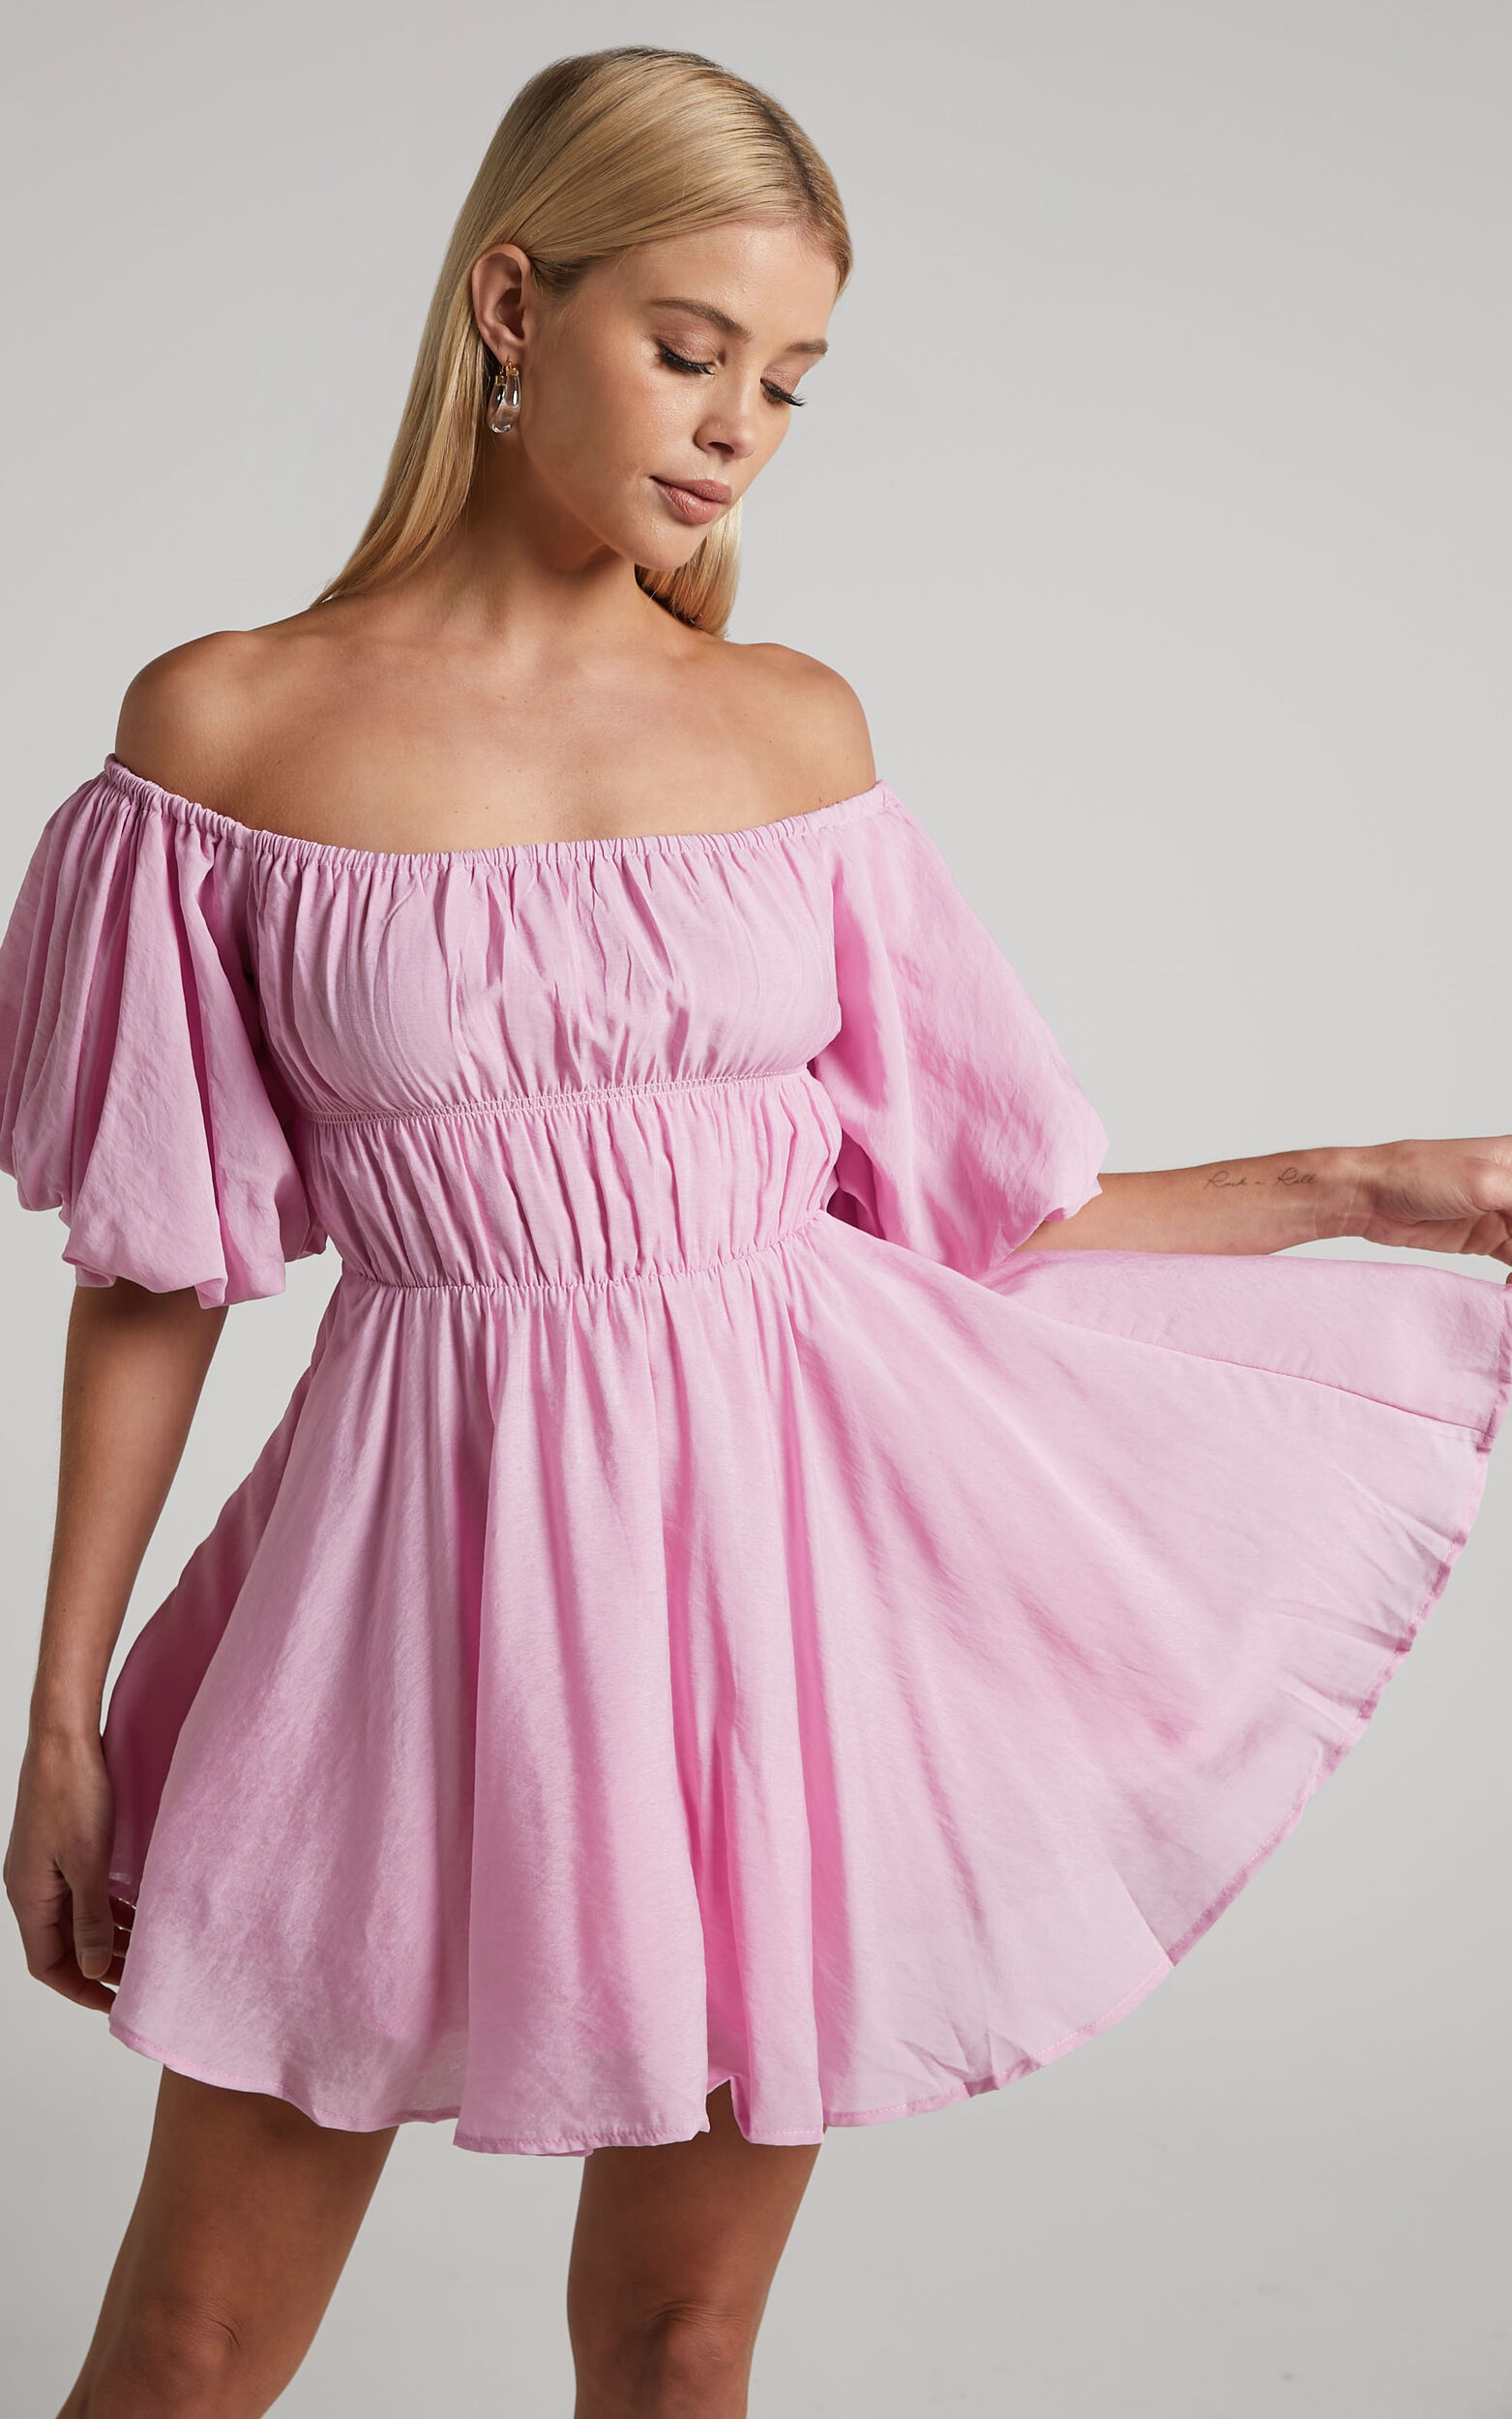 Jessra Mini Dress - Off Shoulder Puff Sleeve Dress in Pink - 06, PNK1